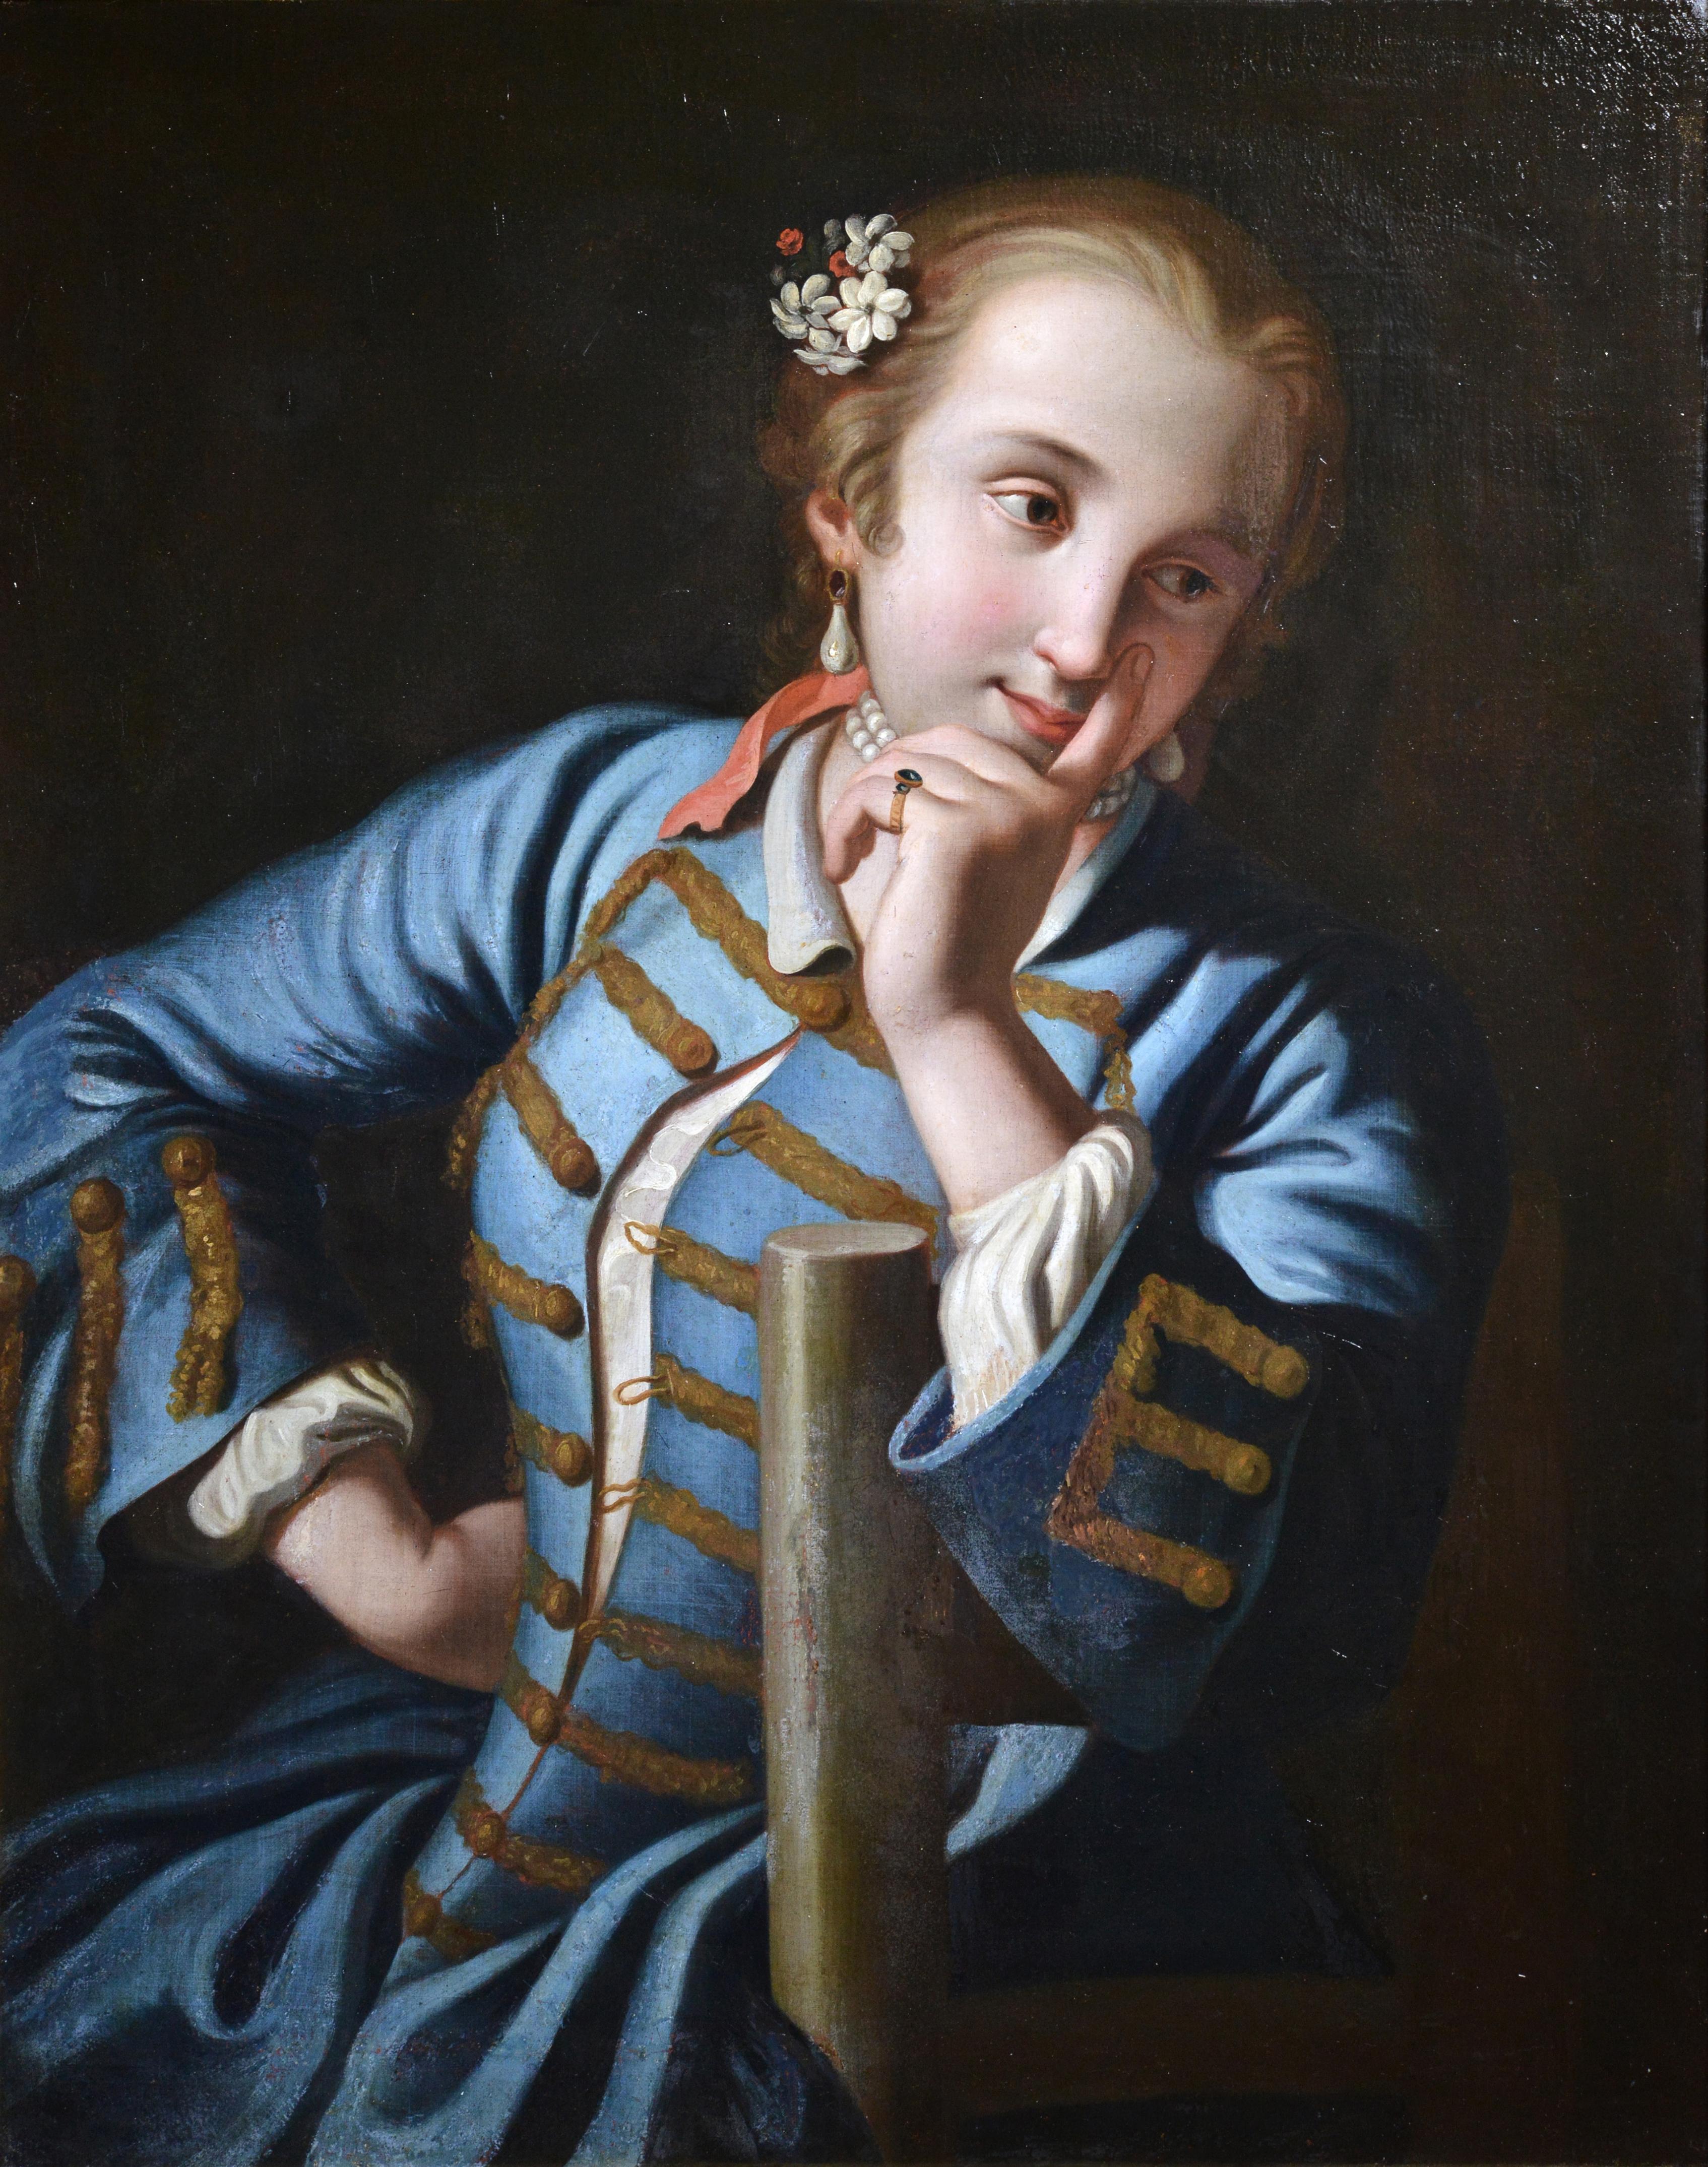 Portrait of Languid Girl in Blue Camisole 18th century Italian Rococo Master - Painting by Pietro Antonio Rotari